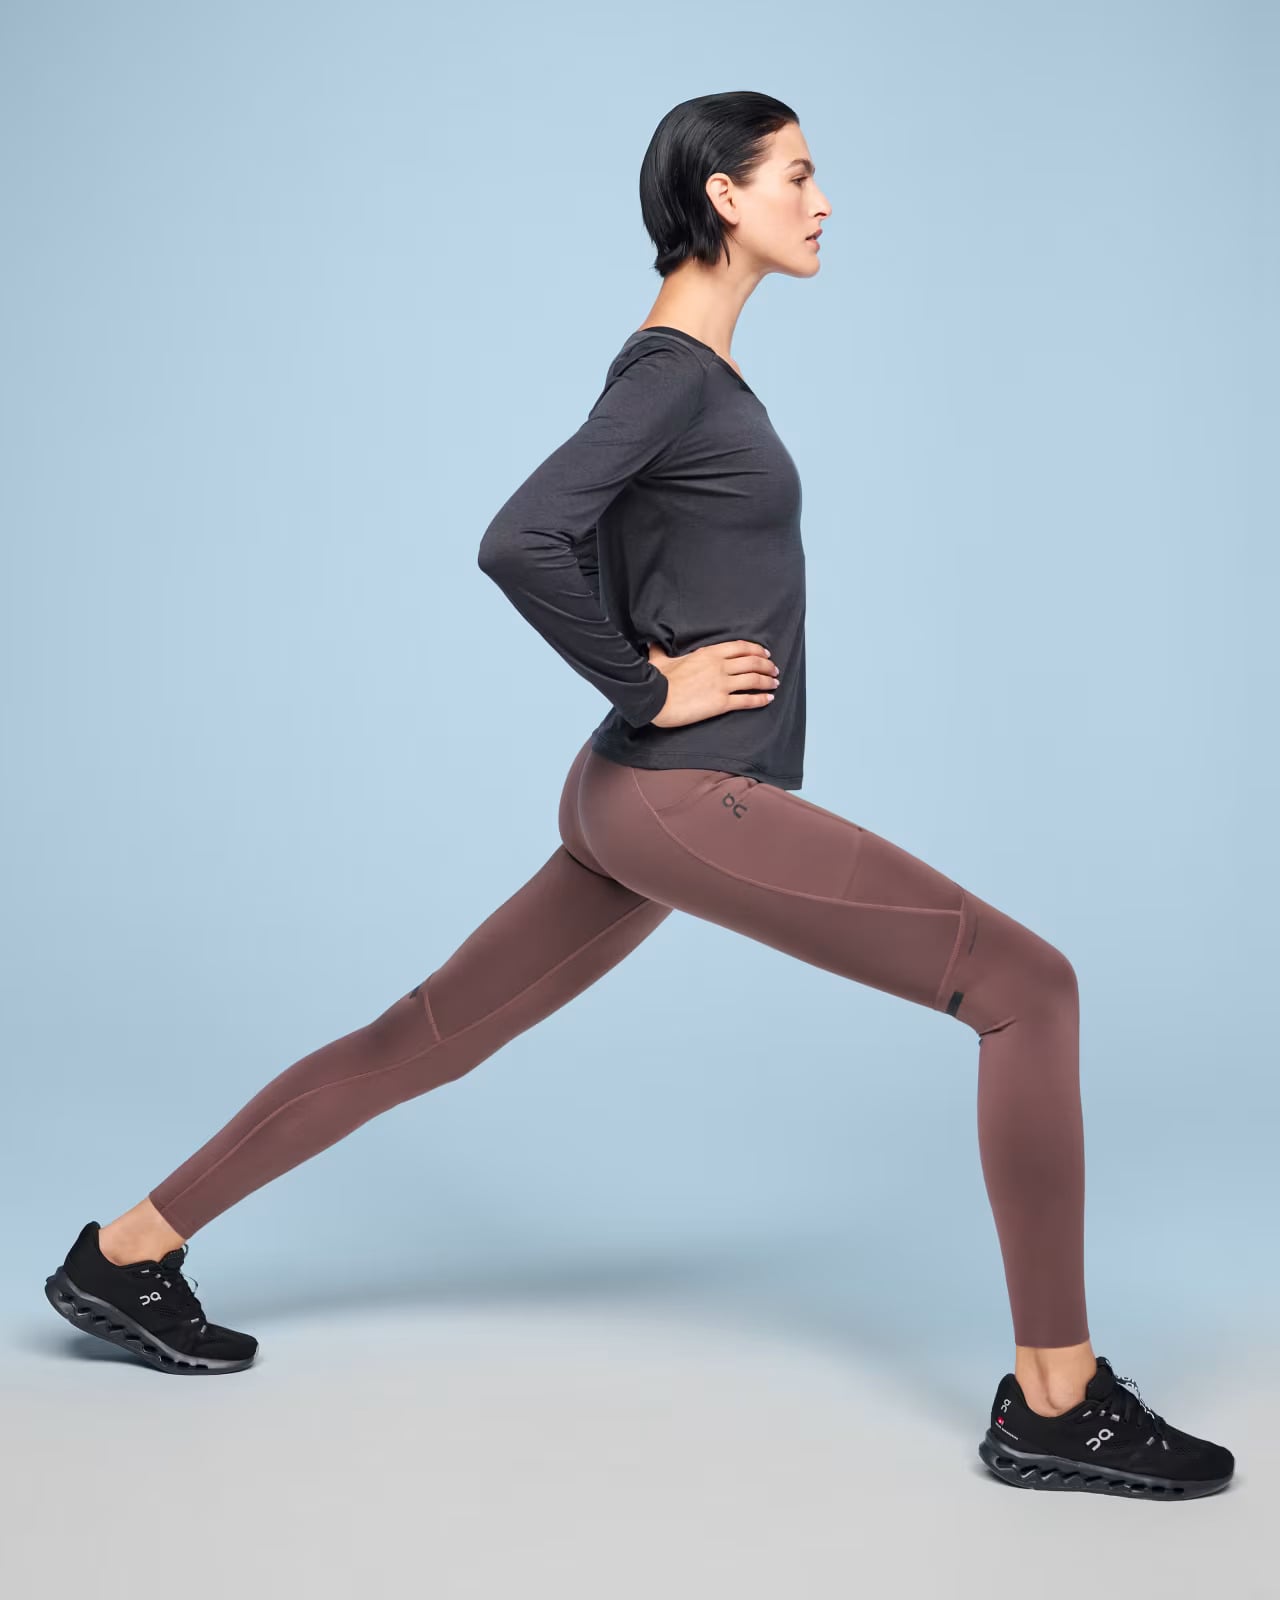 Newly Women Anti-Cellulite Compression Slim Leggings Gym Running